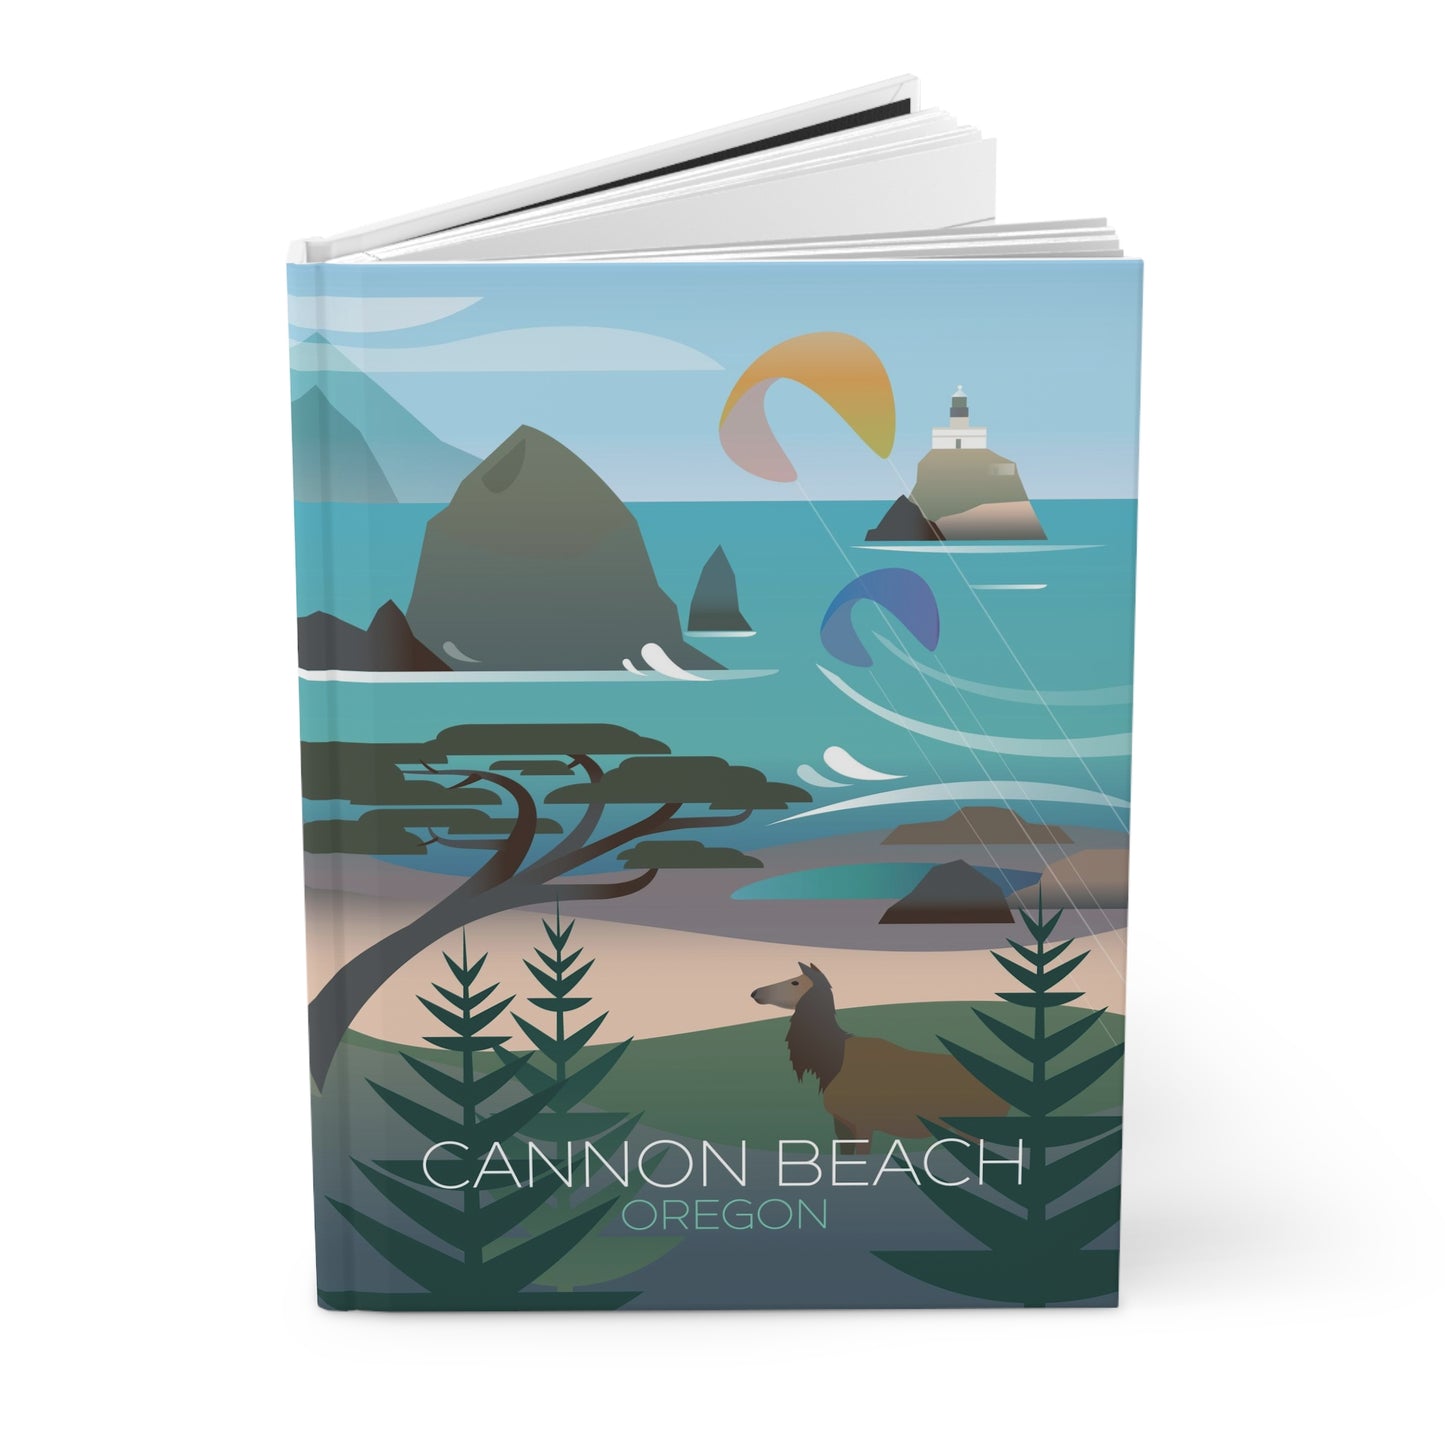 Cannon Beach Hardcover Journal